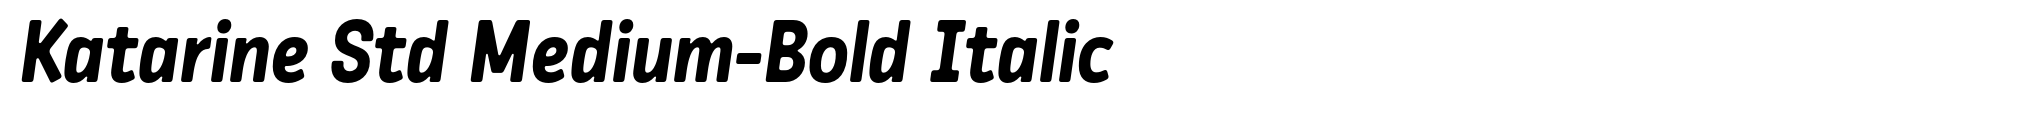 Katarine Std Medium-Bold Italic image